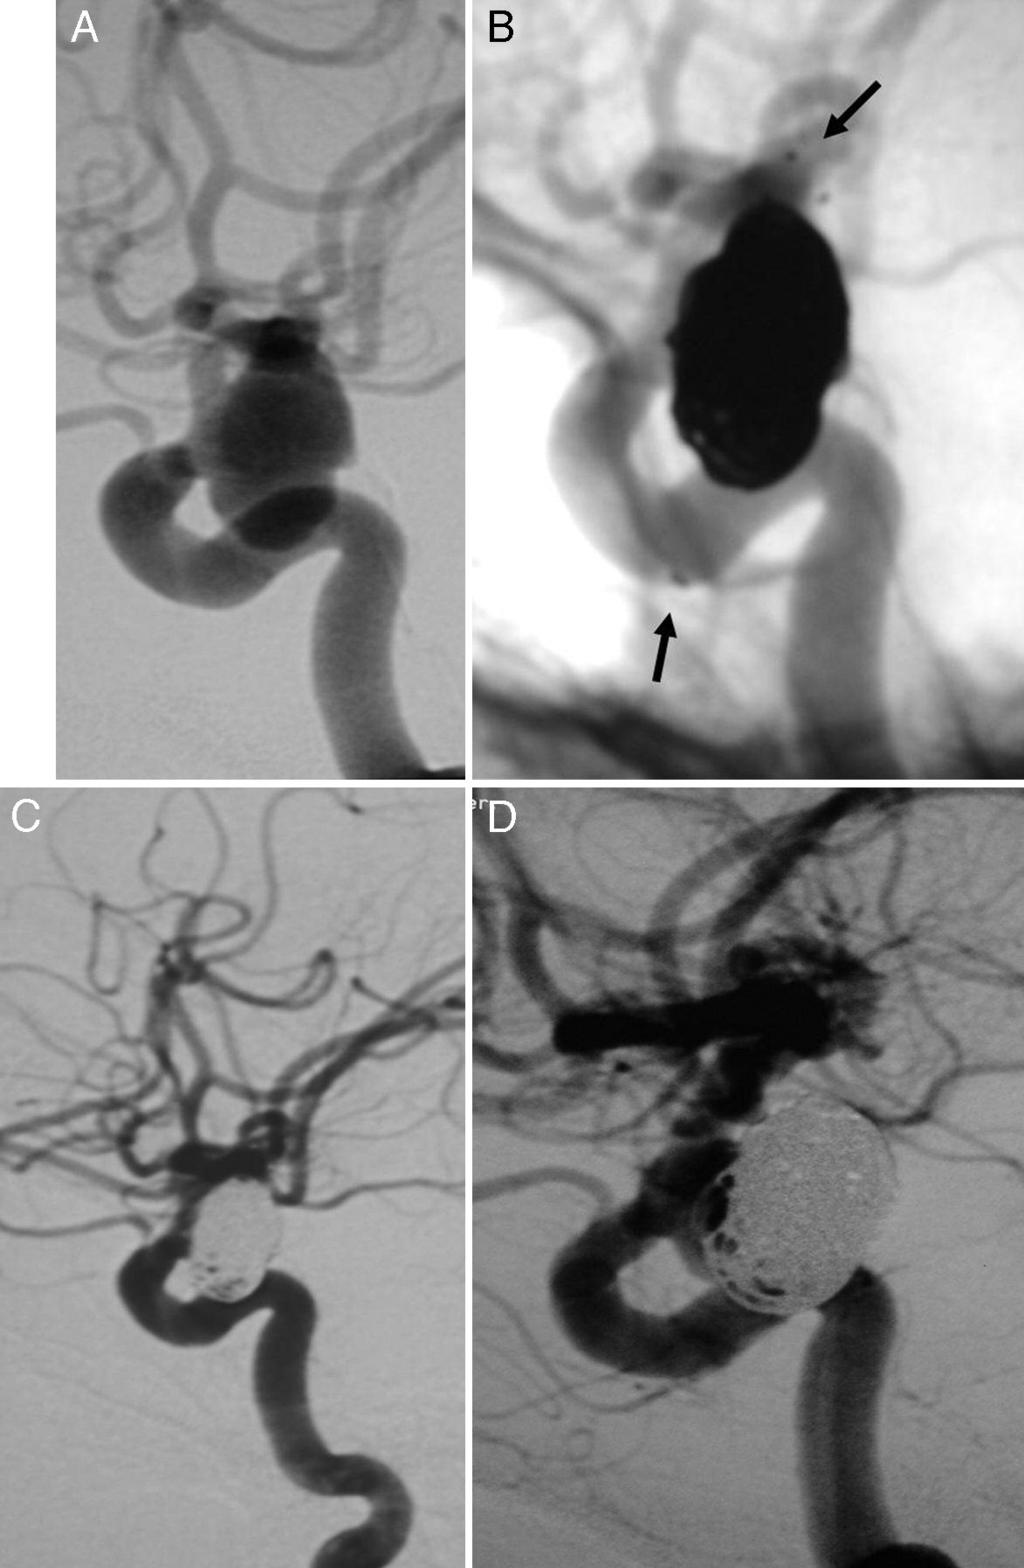 K. Yavuz et al. FIG. 4. A: Pretreatment lateral carotid artery angiogram showing a broad-necked ICA aneurysm.